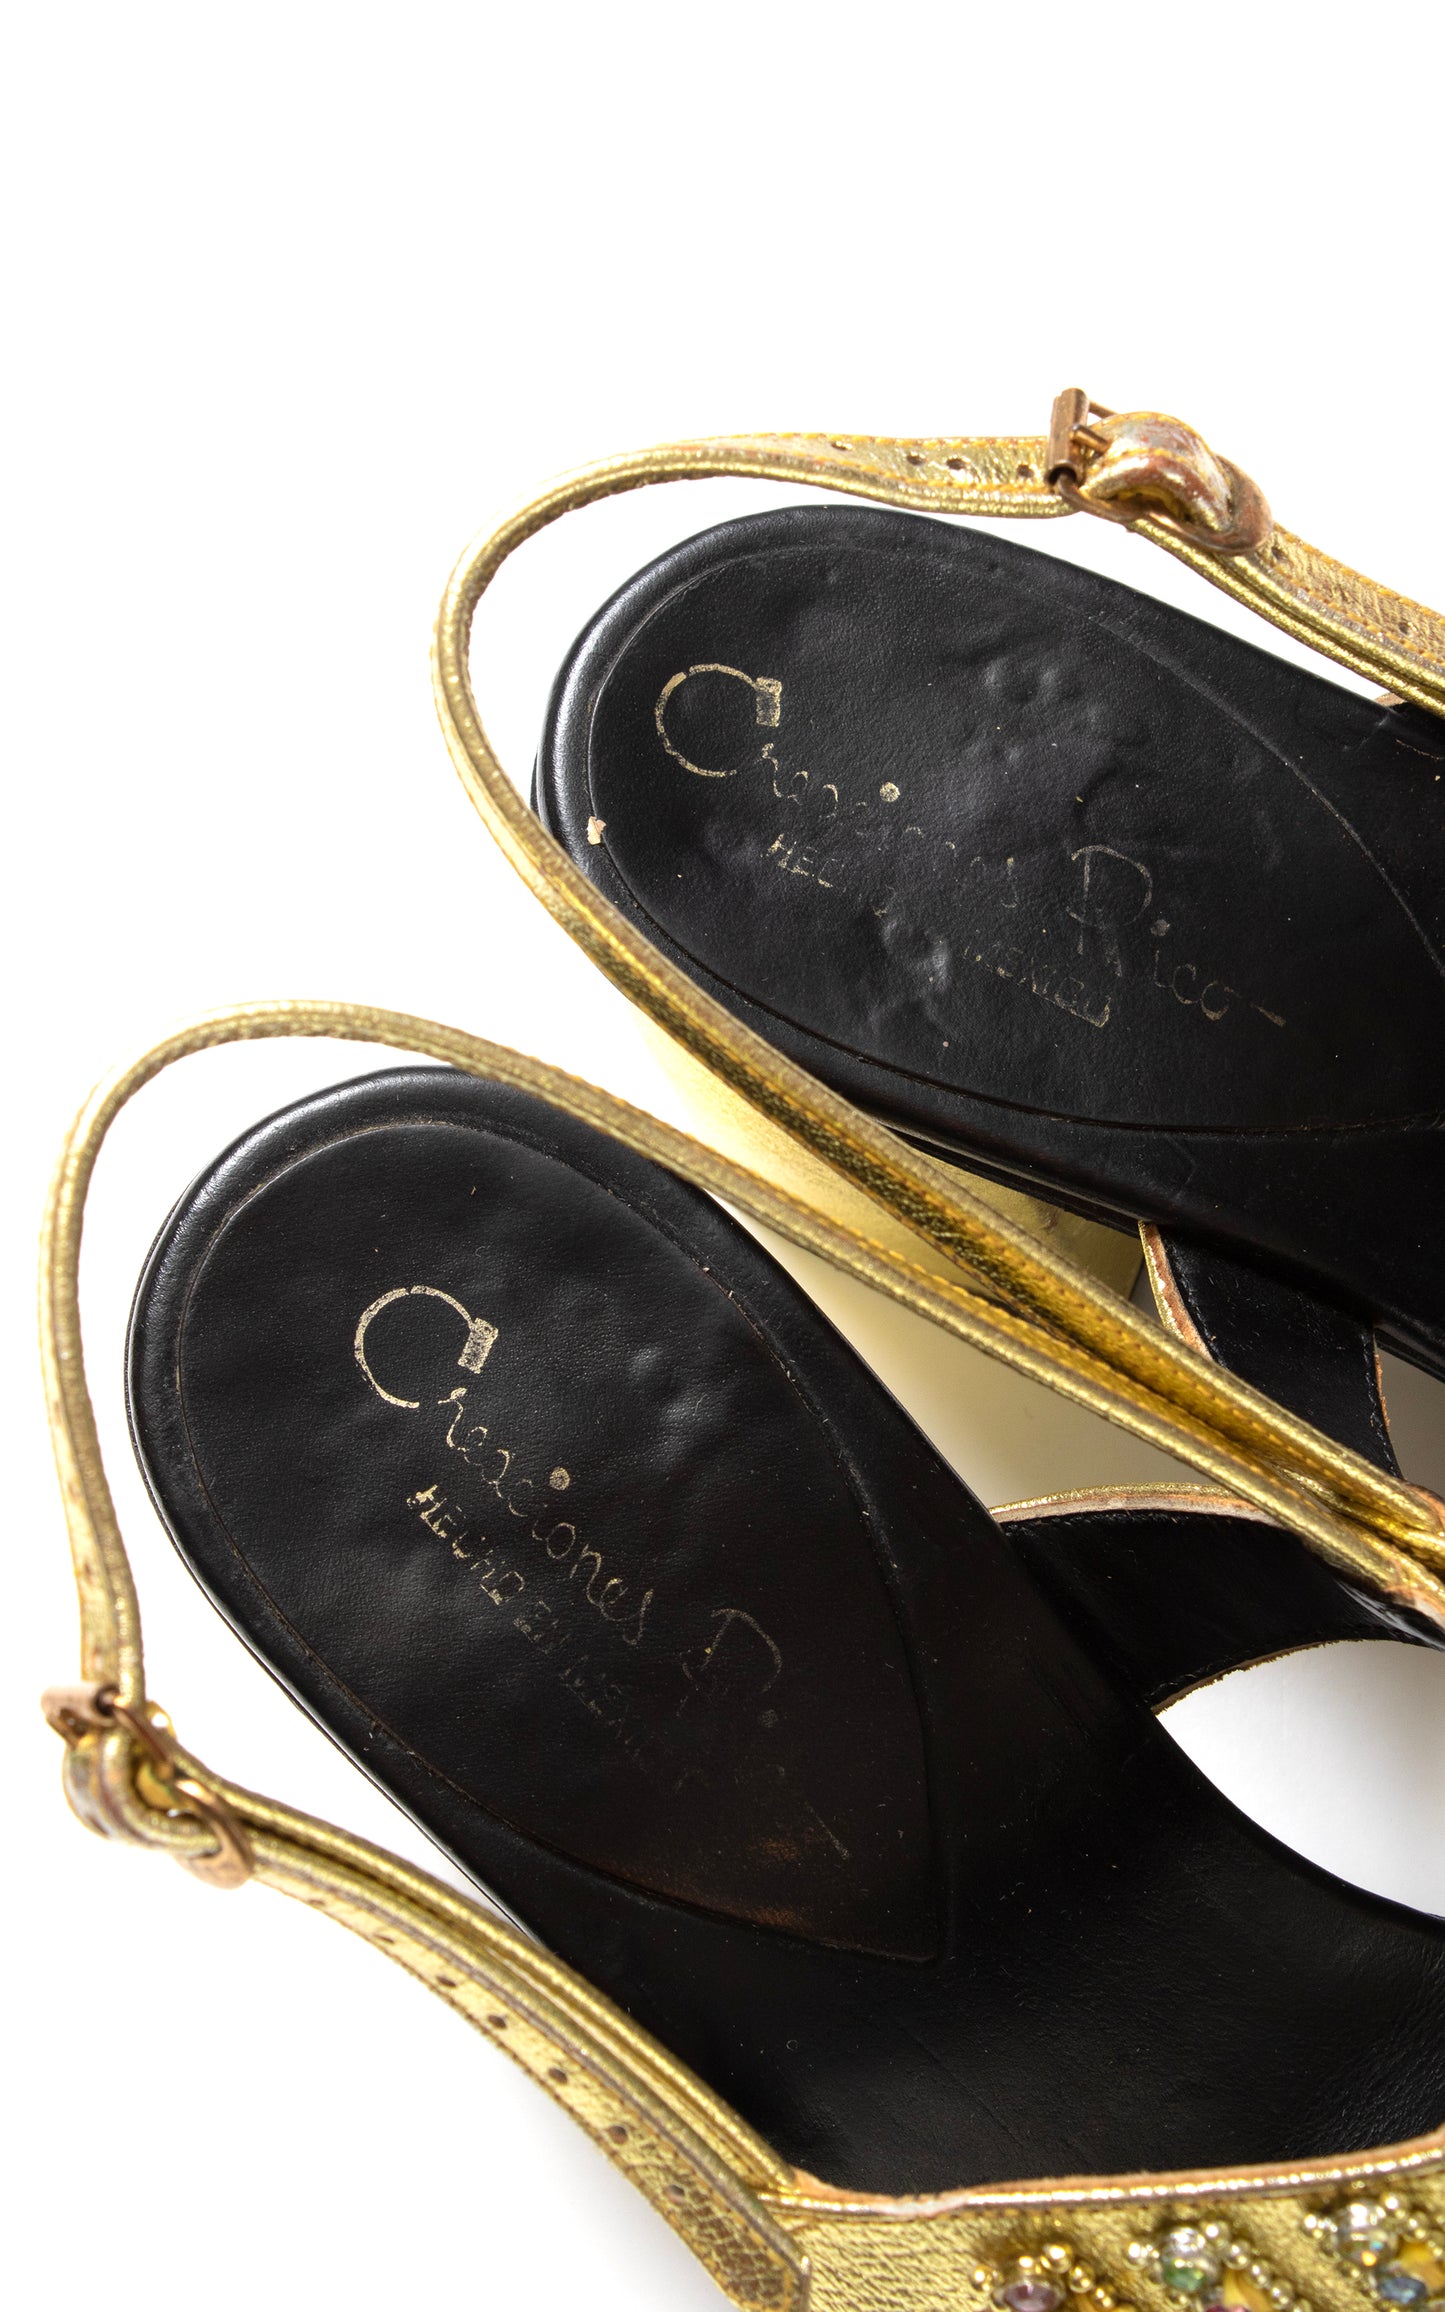 1960s Rhinestone Jeweled Gold Platform Sandals | size US 6